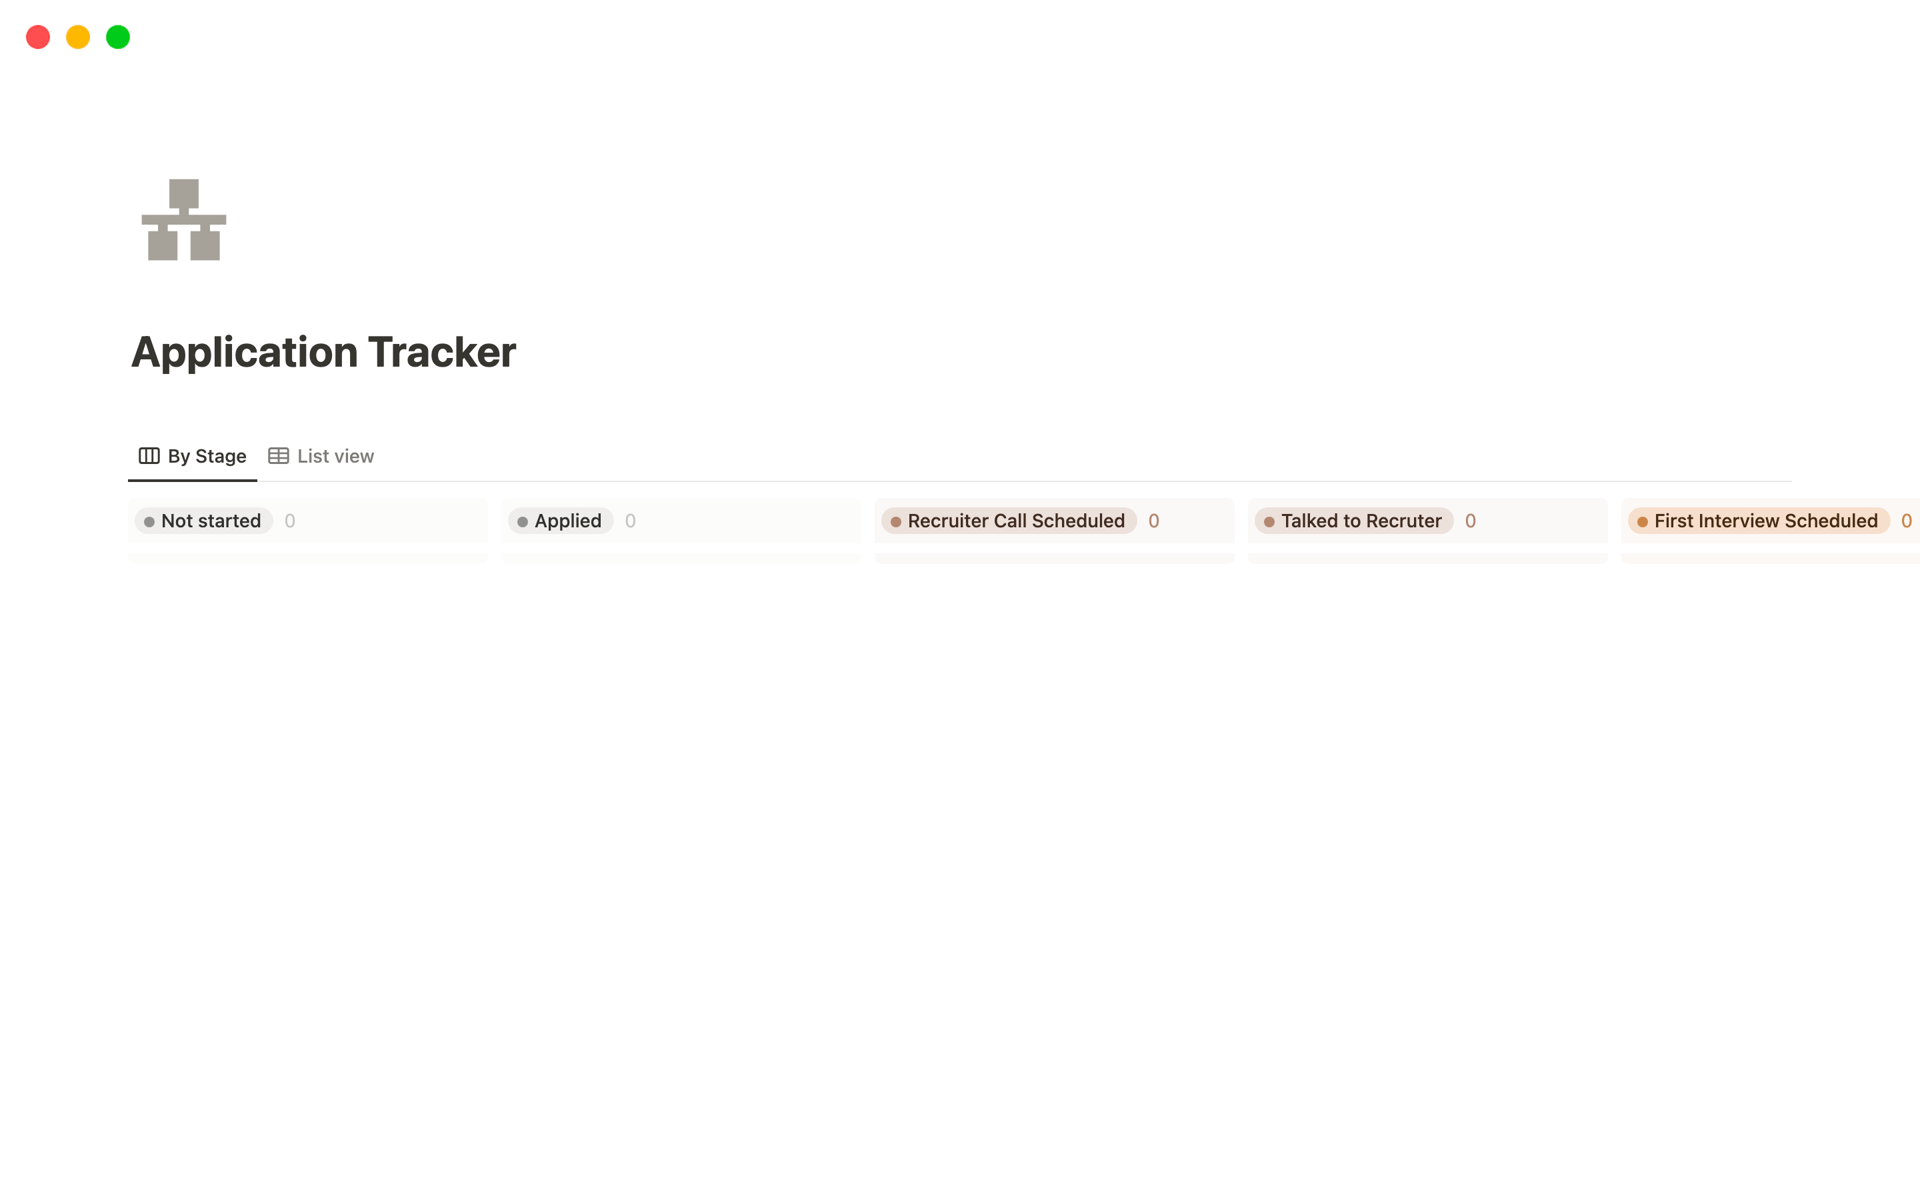 A simple job application tracker